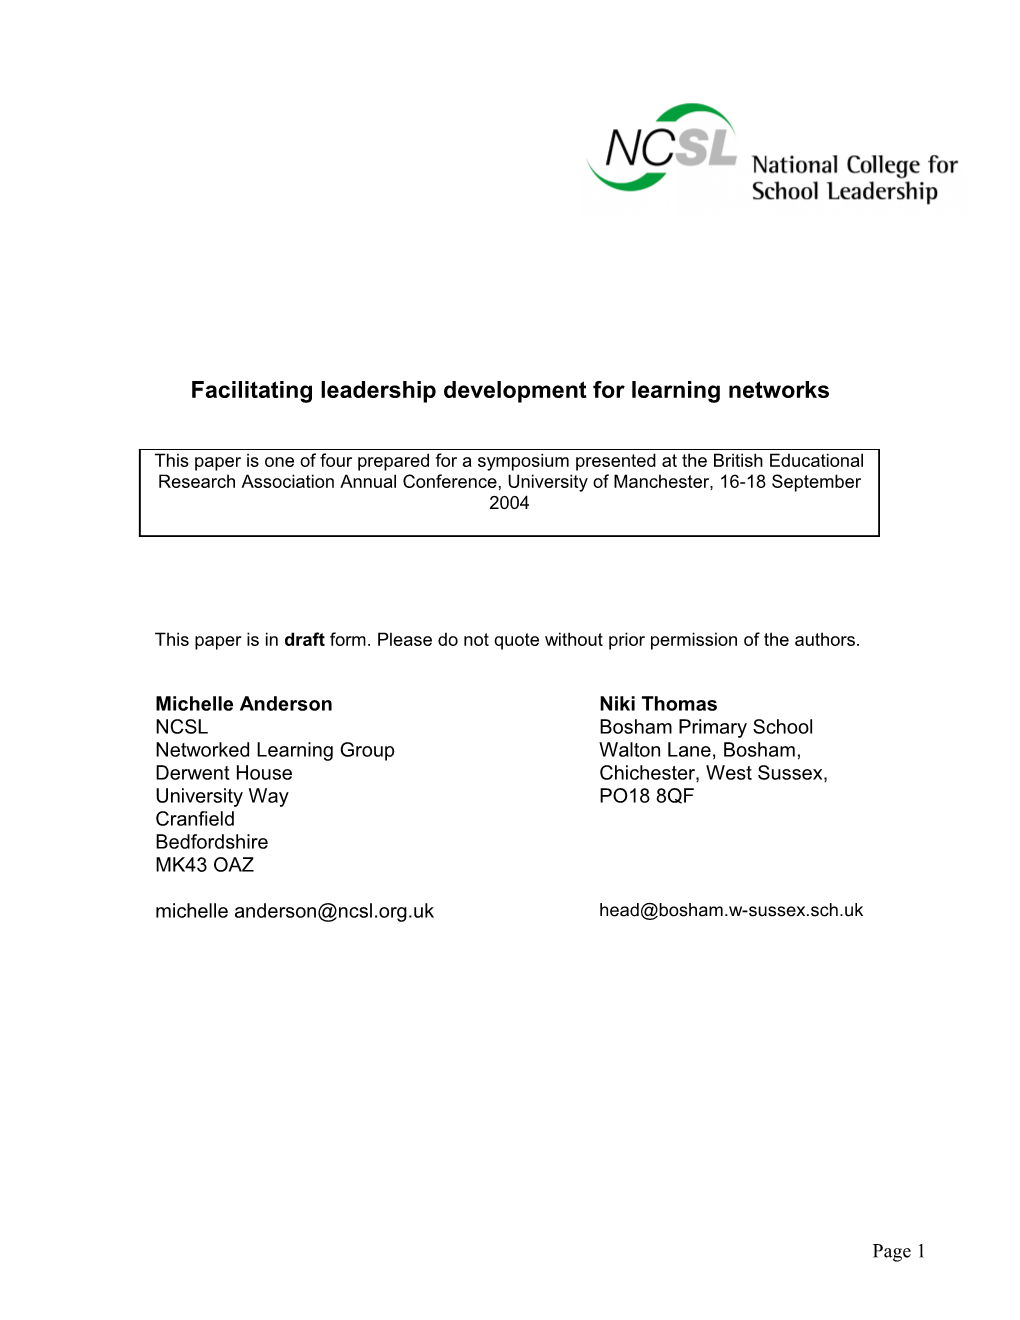 Facilitating Leadership Development for Learning Networks